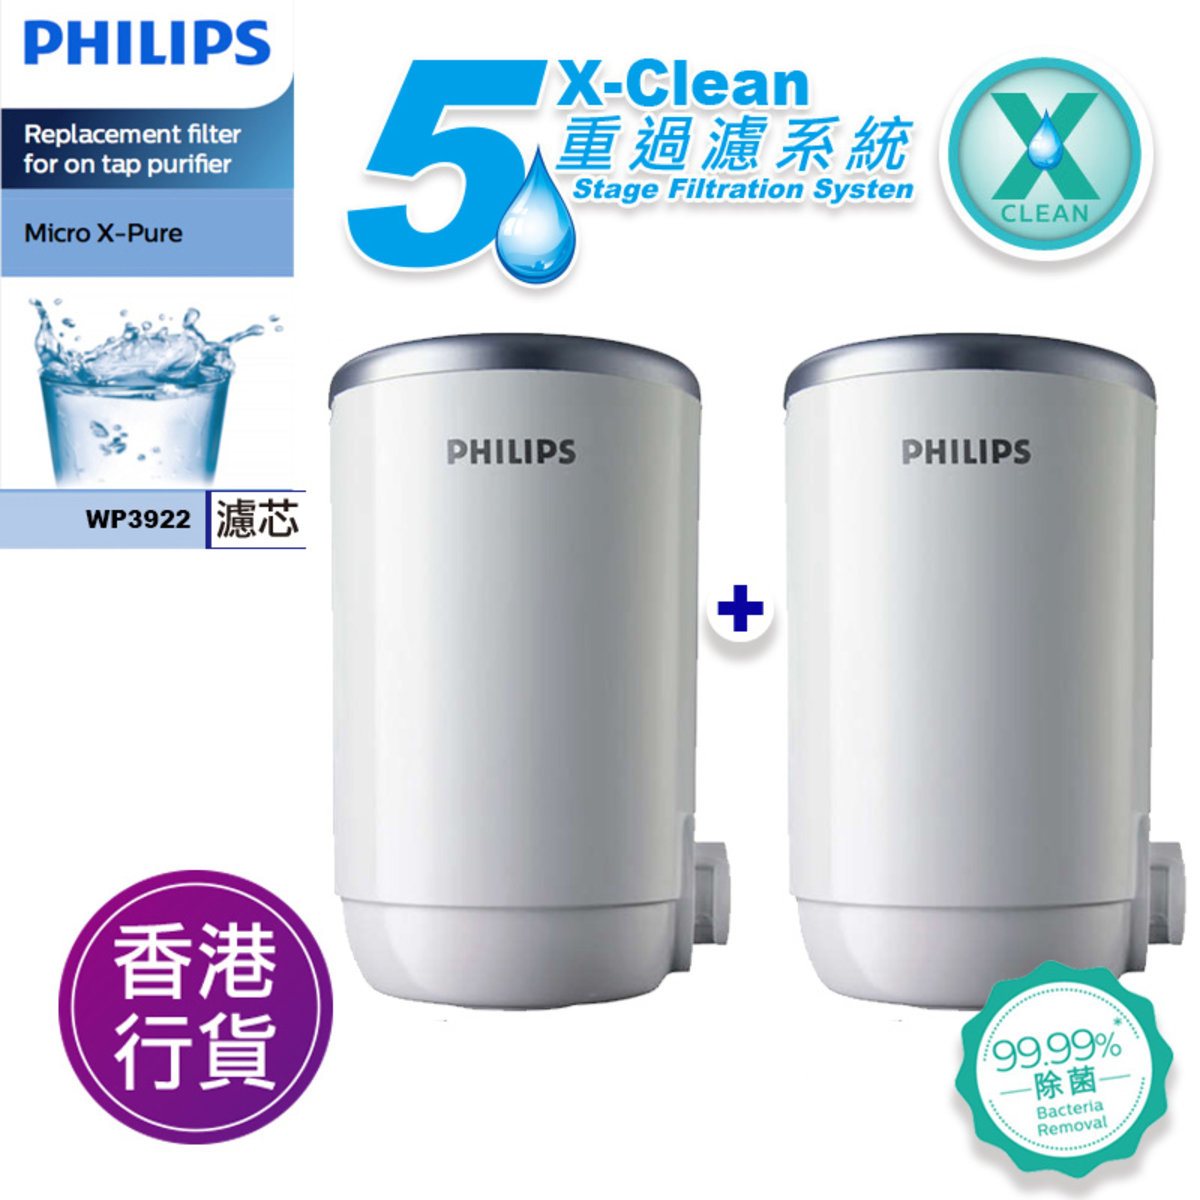 WP3922 faucet water filter replacement filter 2pcs